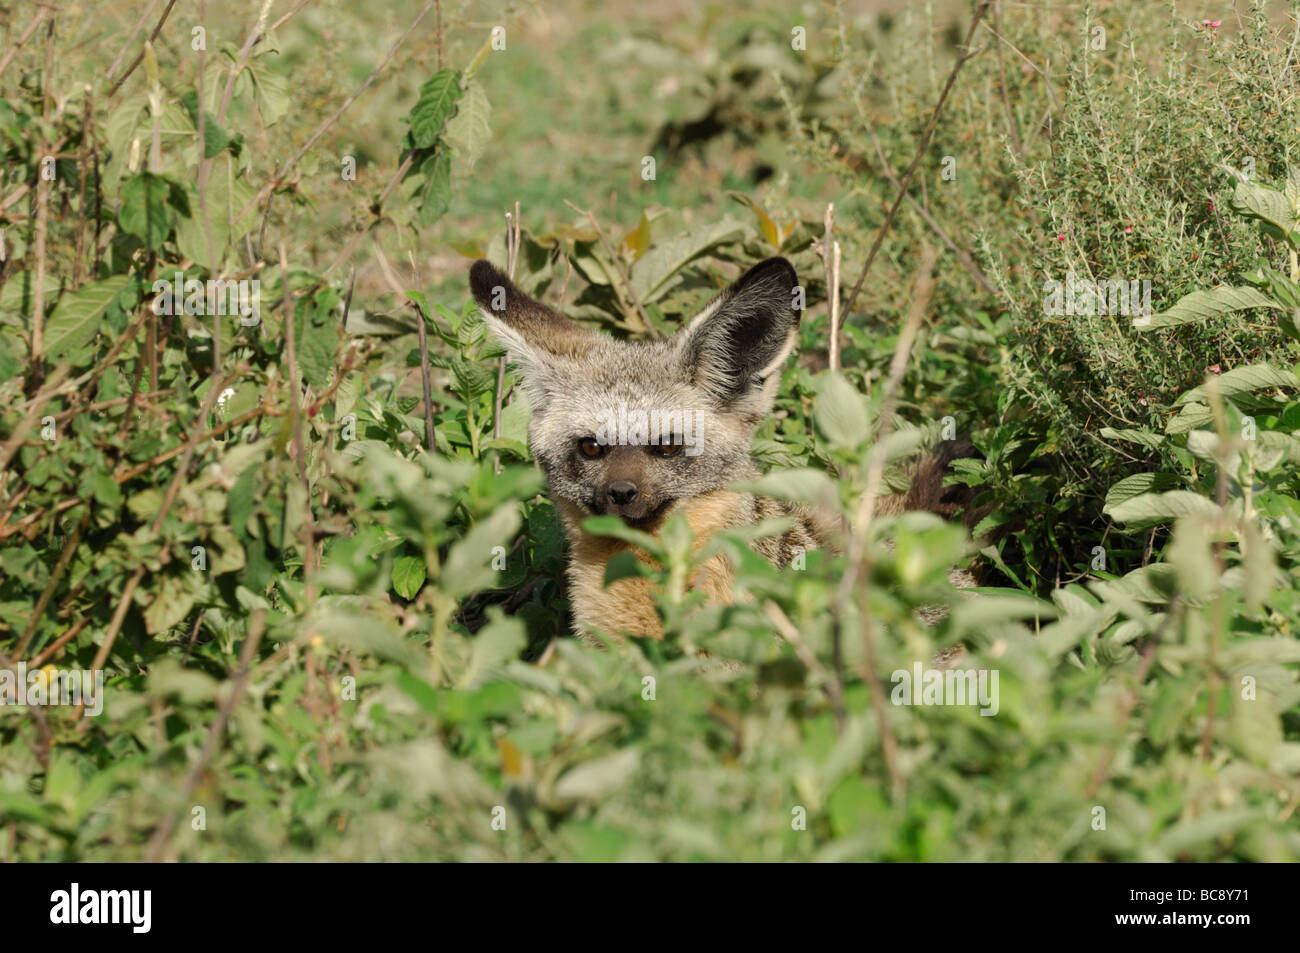 Stock Foto von einem Hieb-eared Fuchs peering von hinten Pinsel, Ndutu, Ngorongoro Conservation Area, Tansania, Februar 2009. Stockfoto